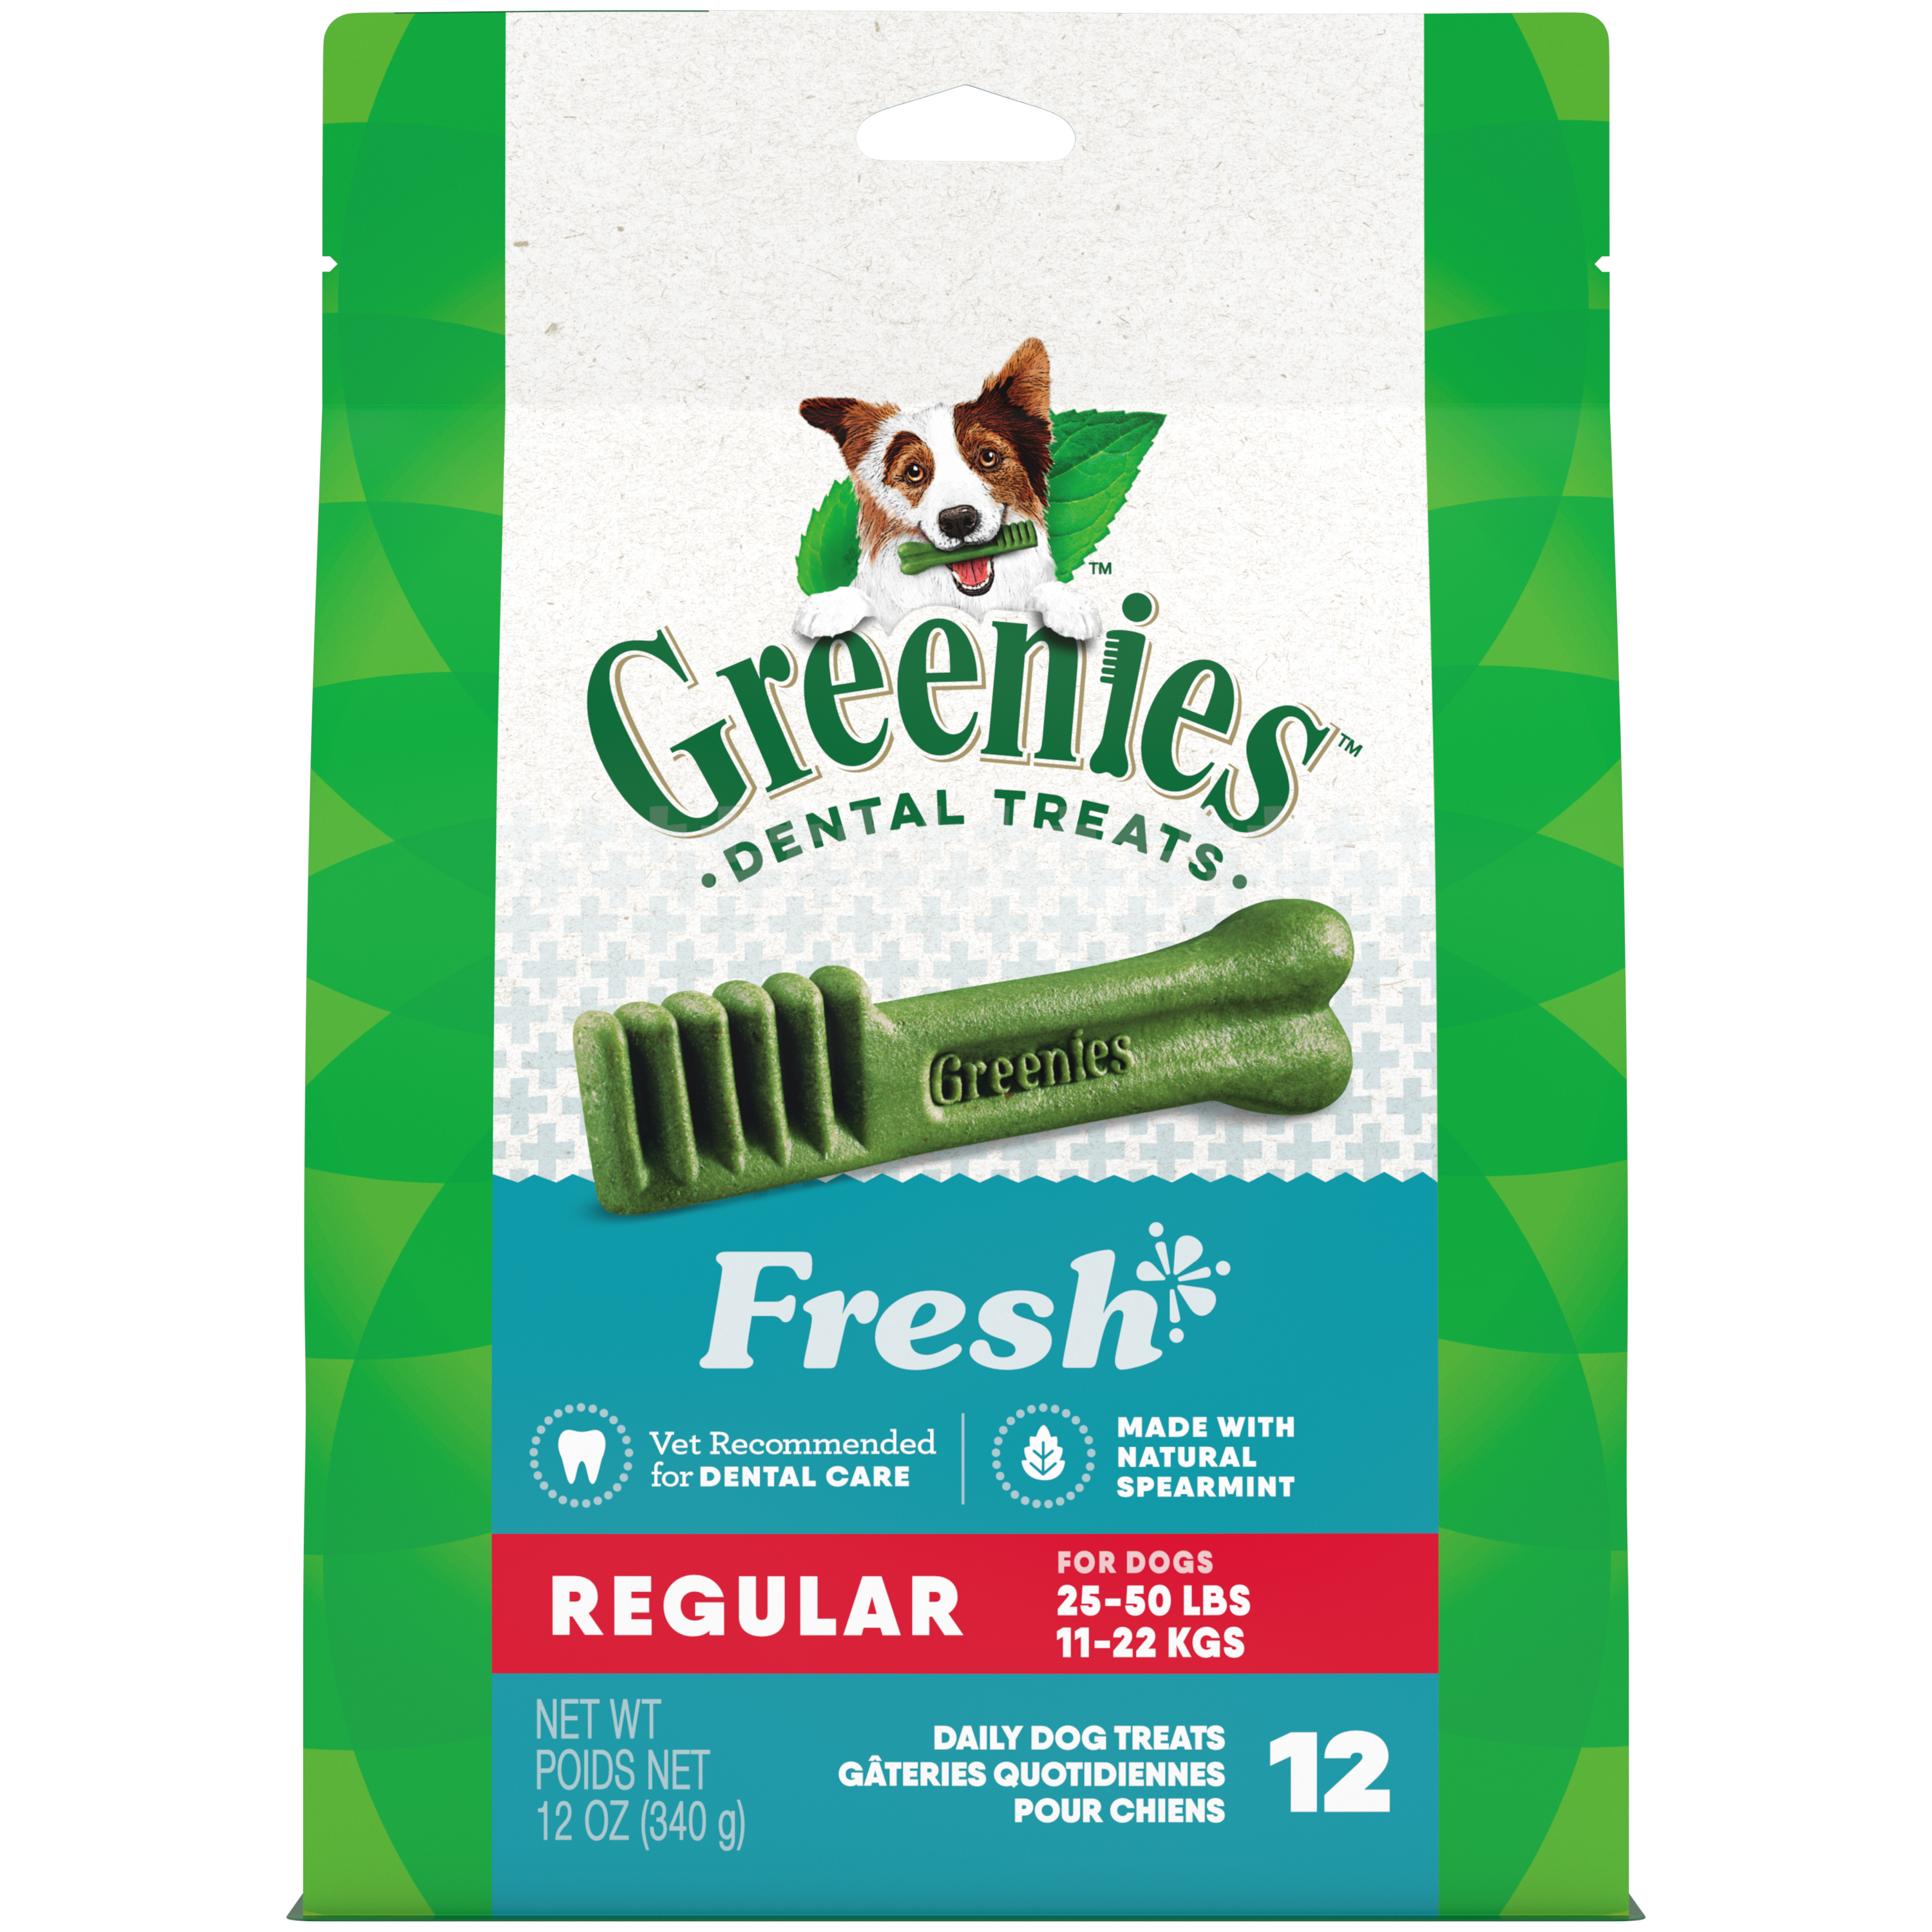 12 oz. Greenies Regular Fresh Treat Pack - Health/First Aid